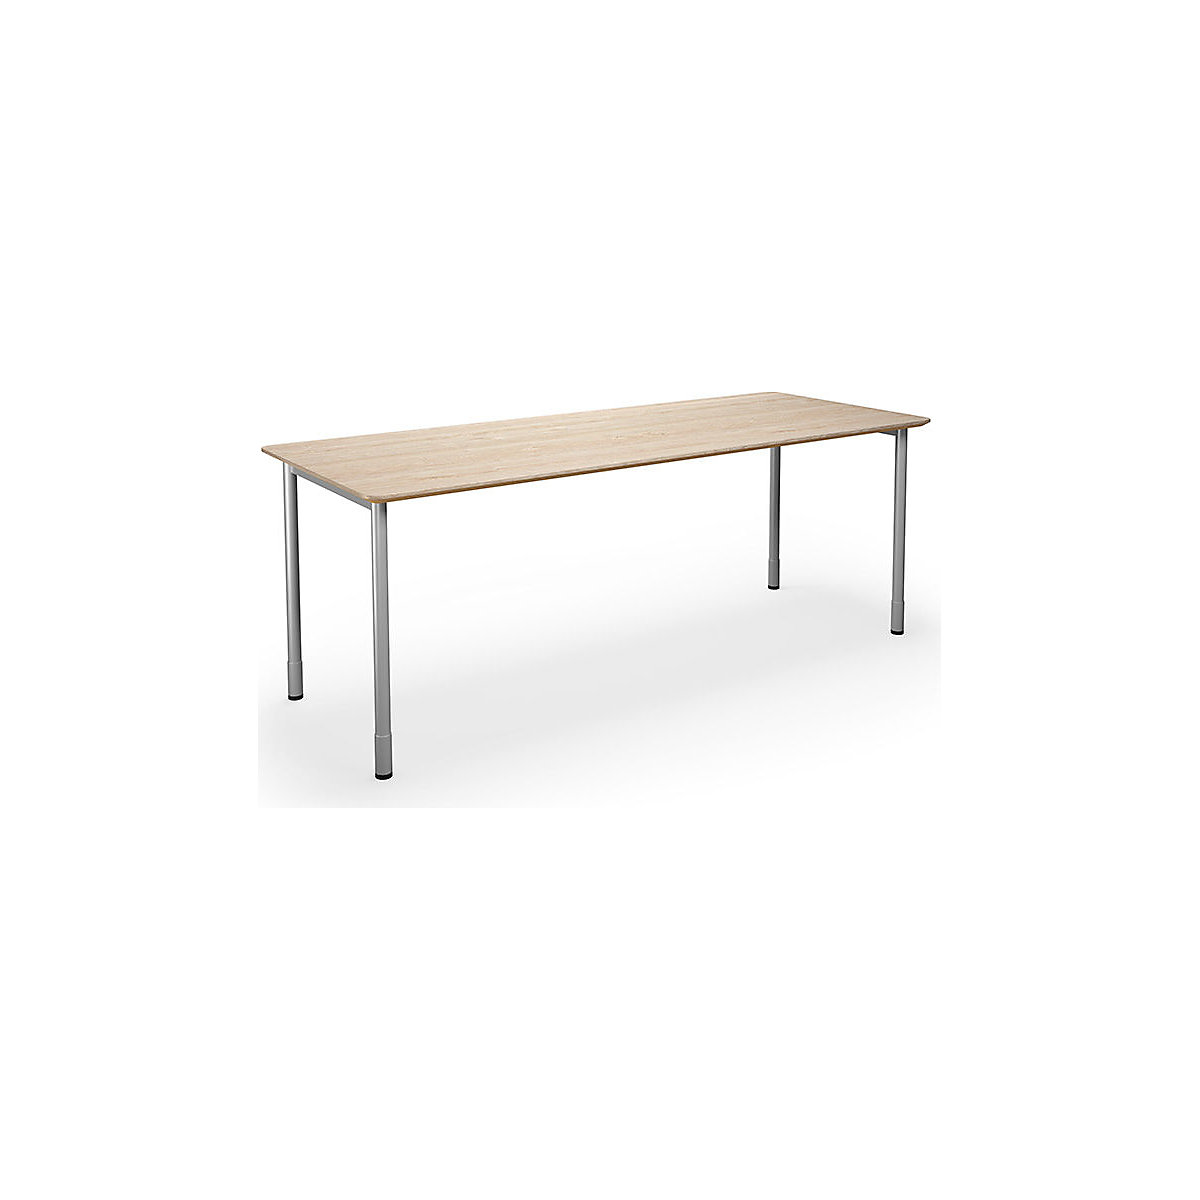 DUO-C Trend multi-purpose desk, straight tabletop, rounded corners, WxD 2000 x 800 mm, oak, silver-4